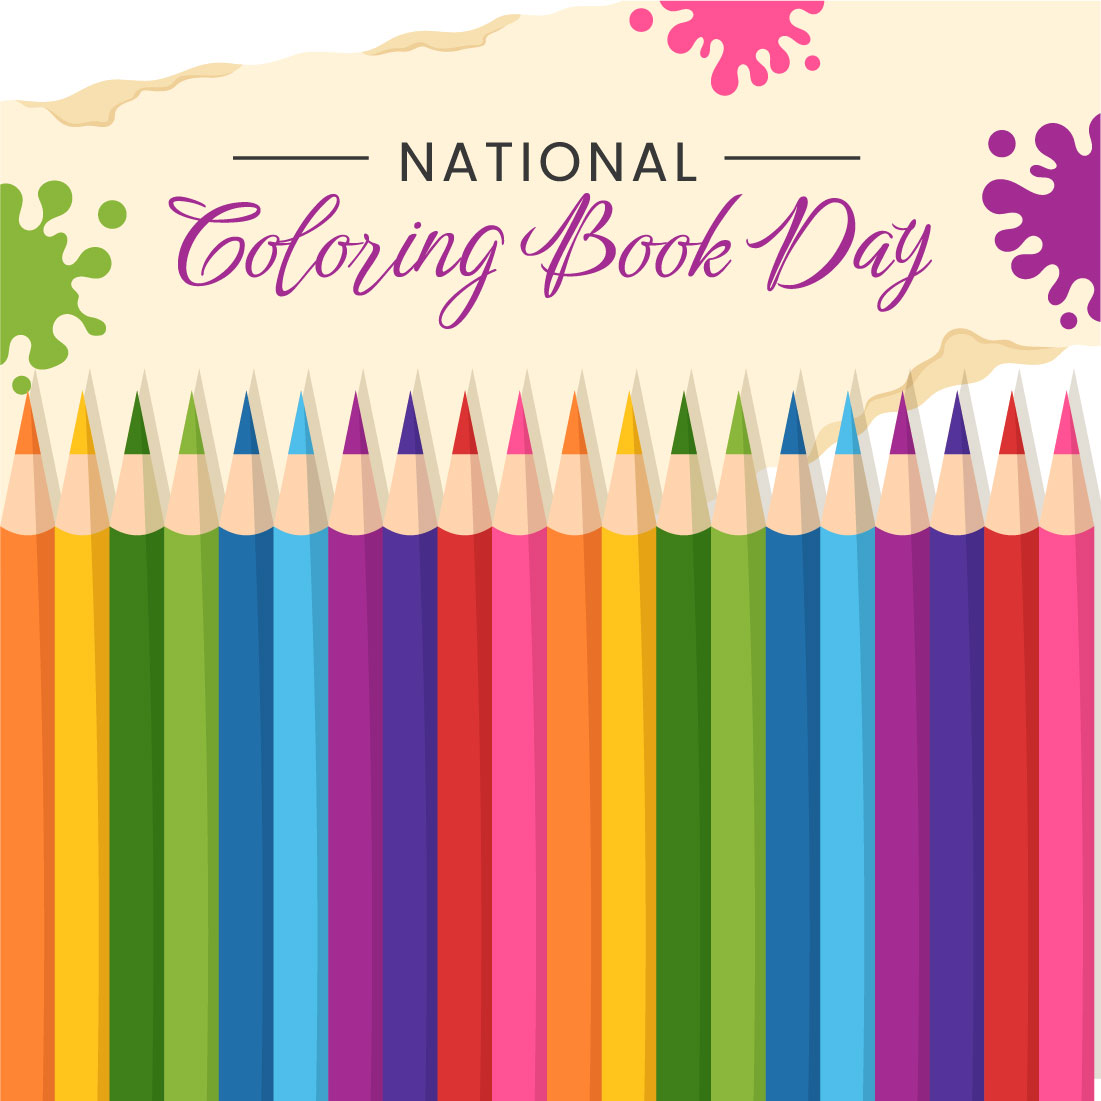 12 National Coloring Book Day Illustration - MasterBundles